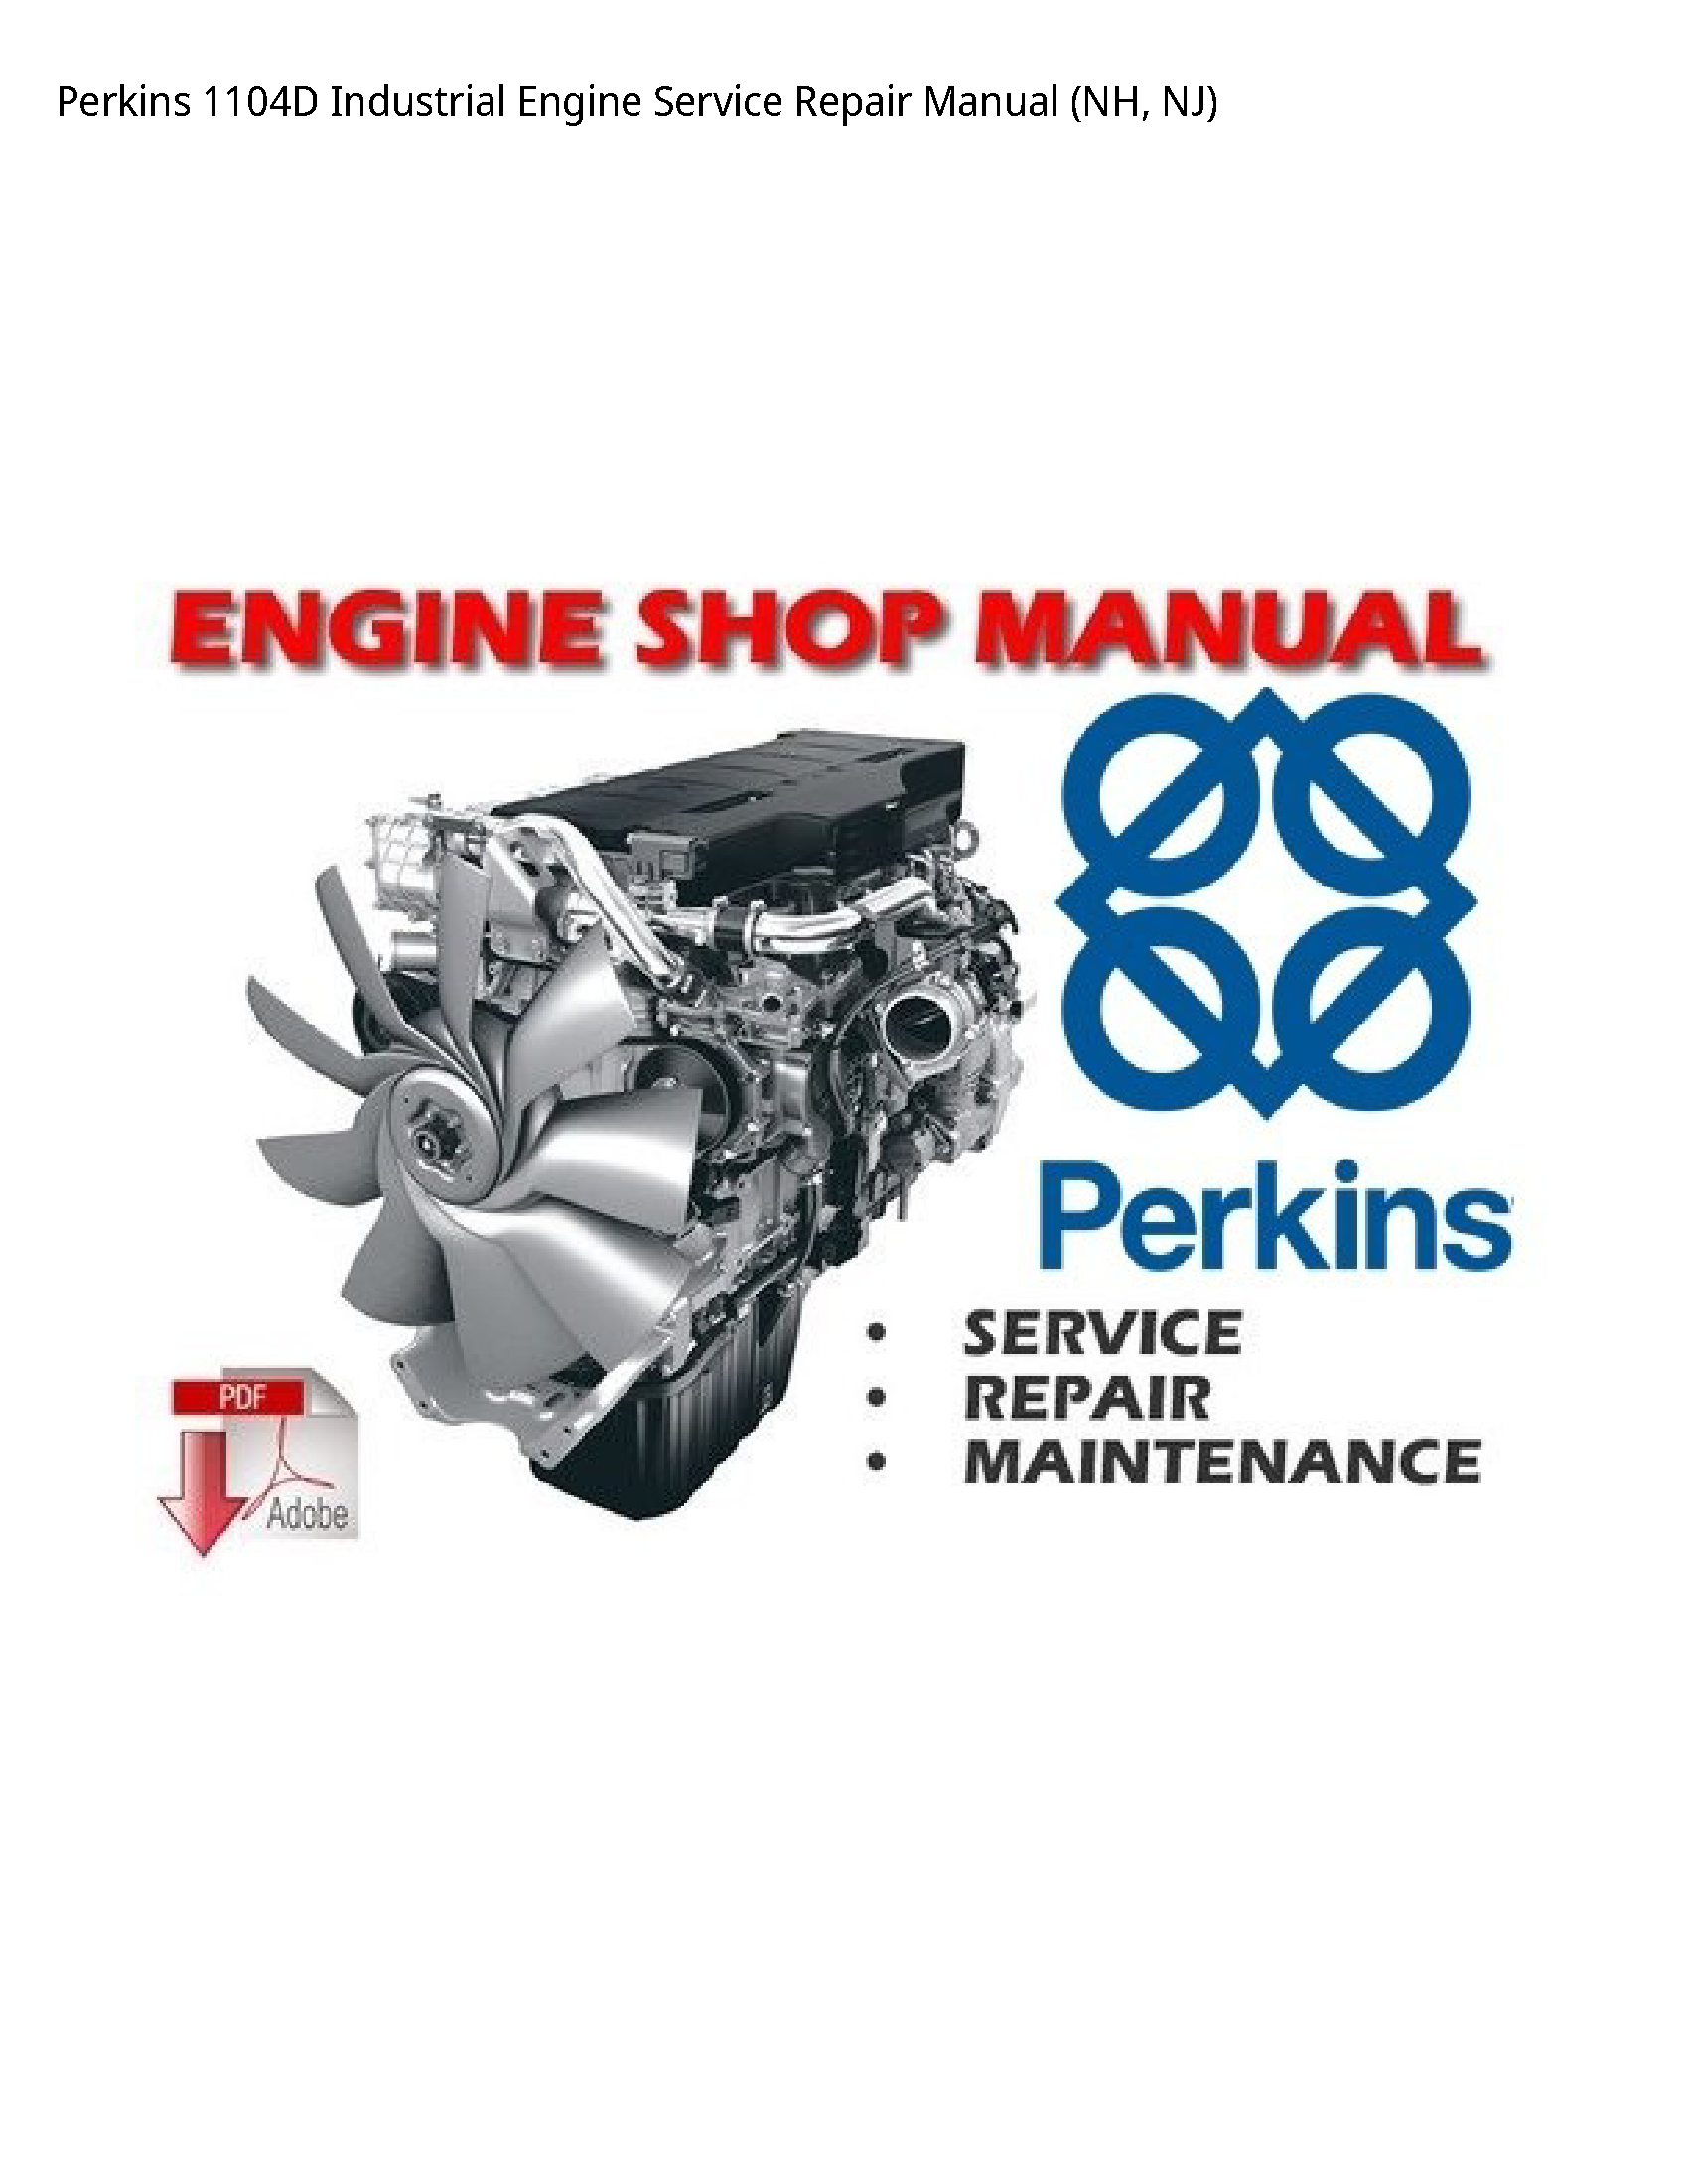 Perkins 1104D Industrial Engine manual